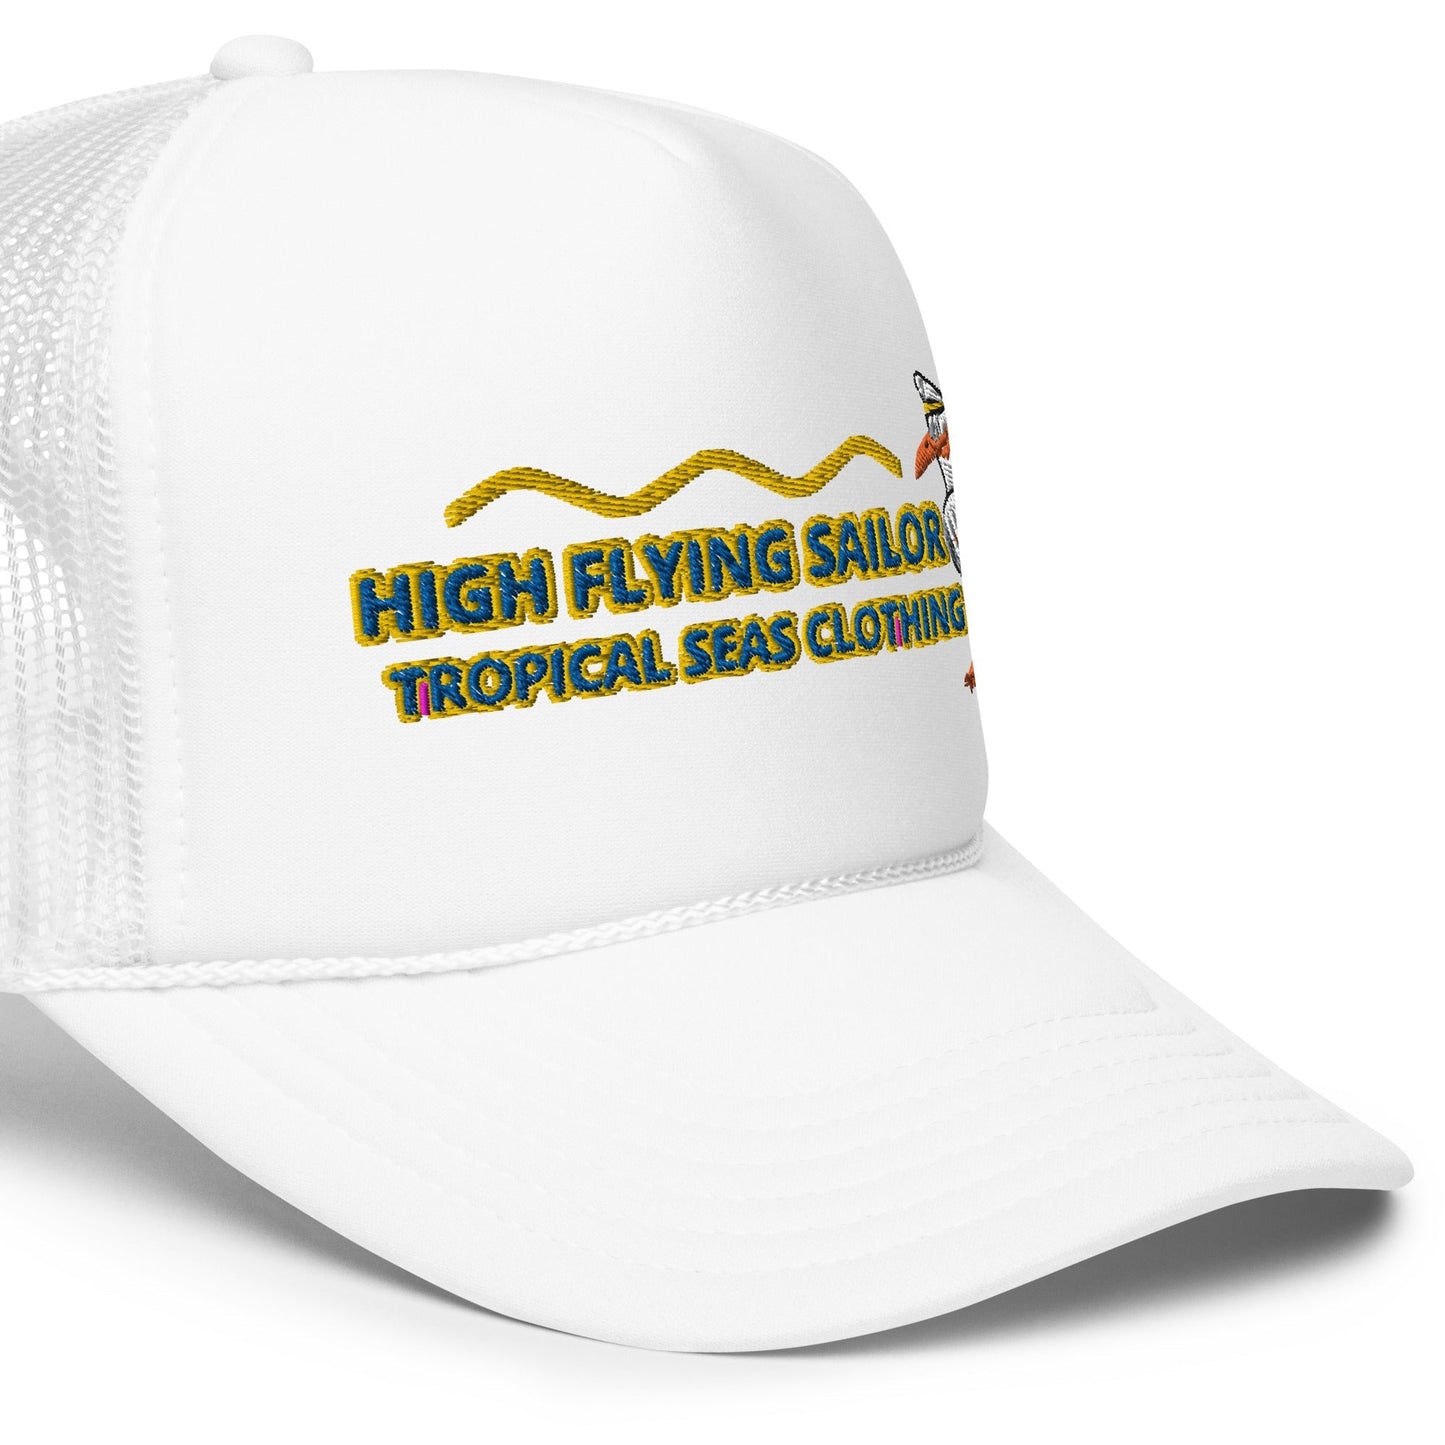 High Flying Sailor Foam trucker hat - Tropical Seas Clothing 